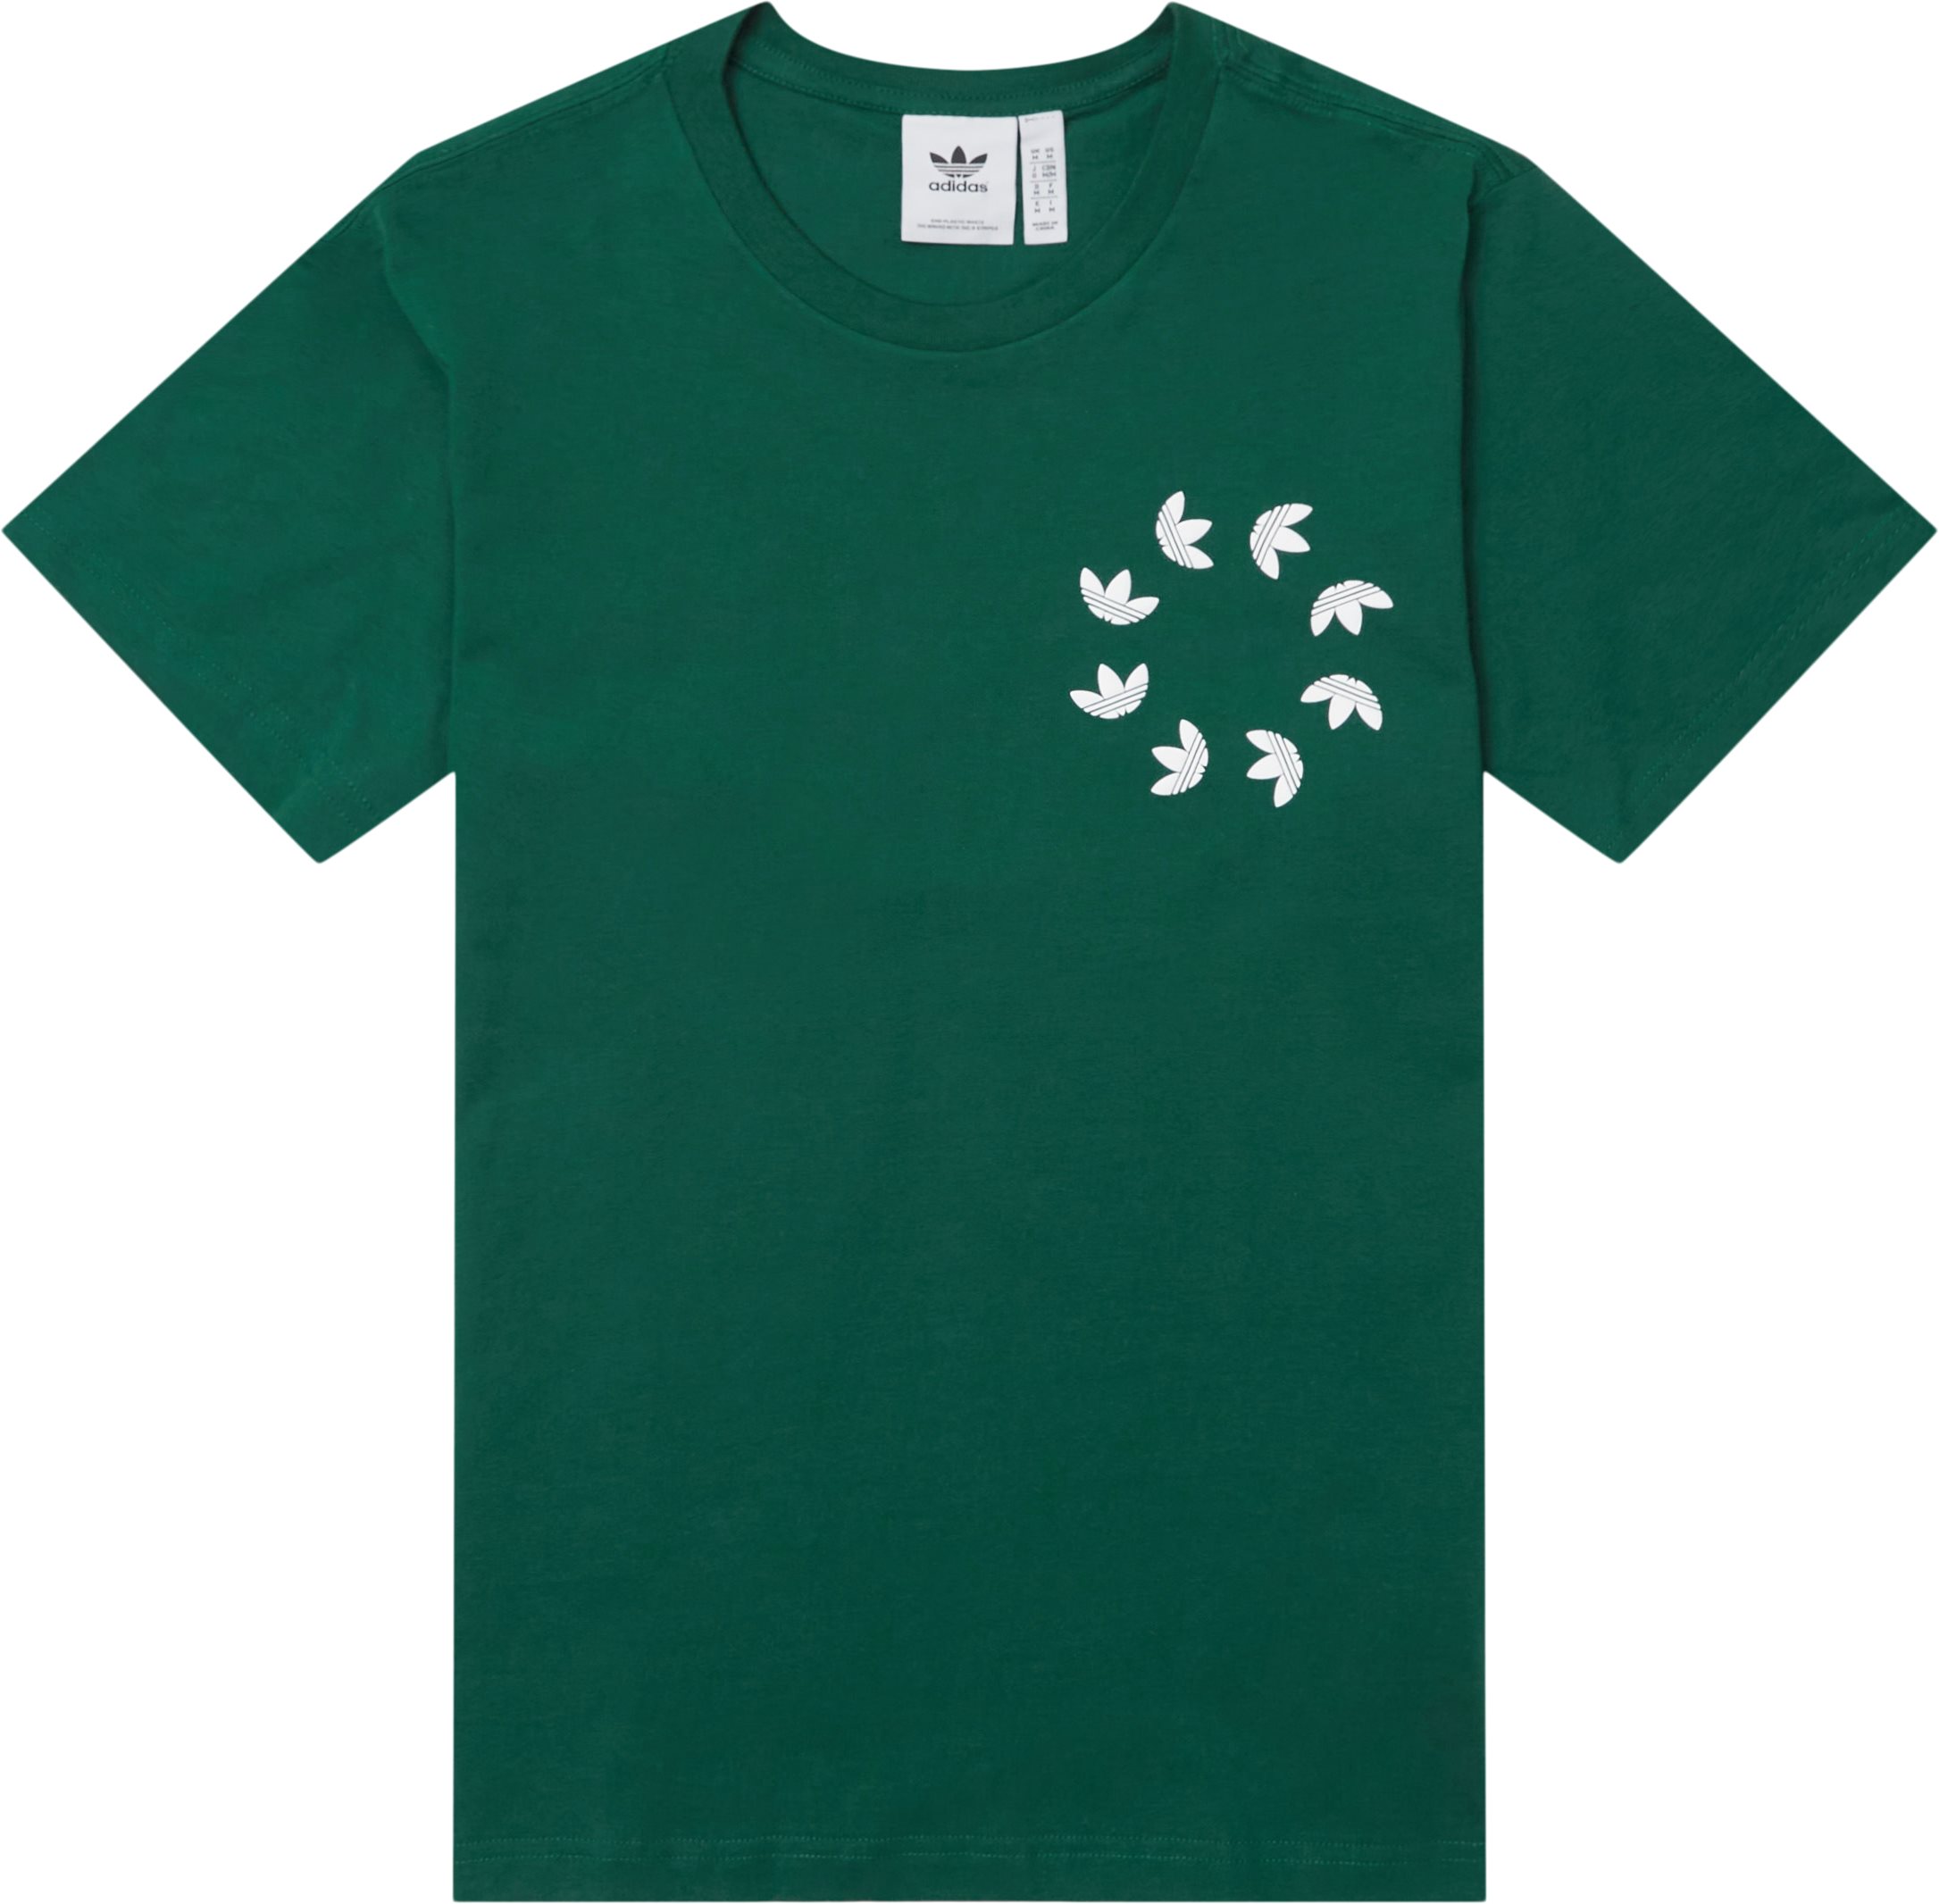 Bld Tee - T-shirts - Regular fit - Green